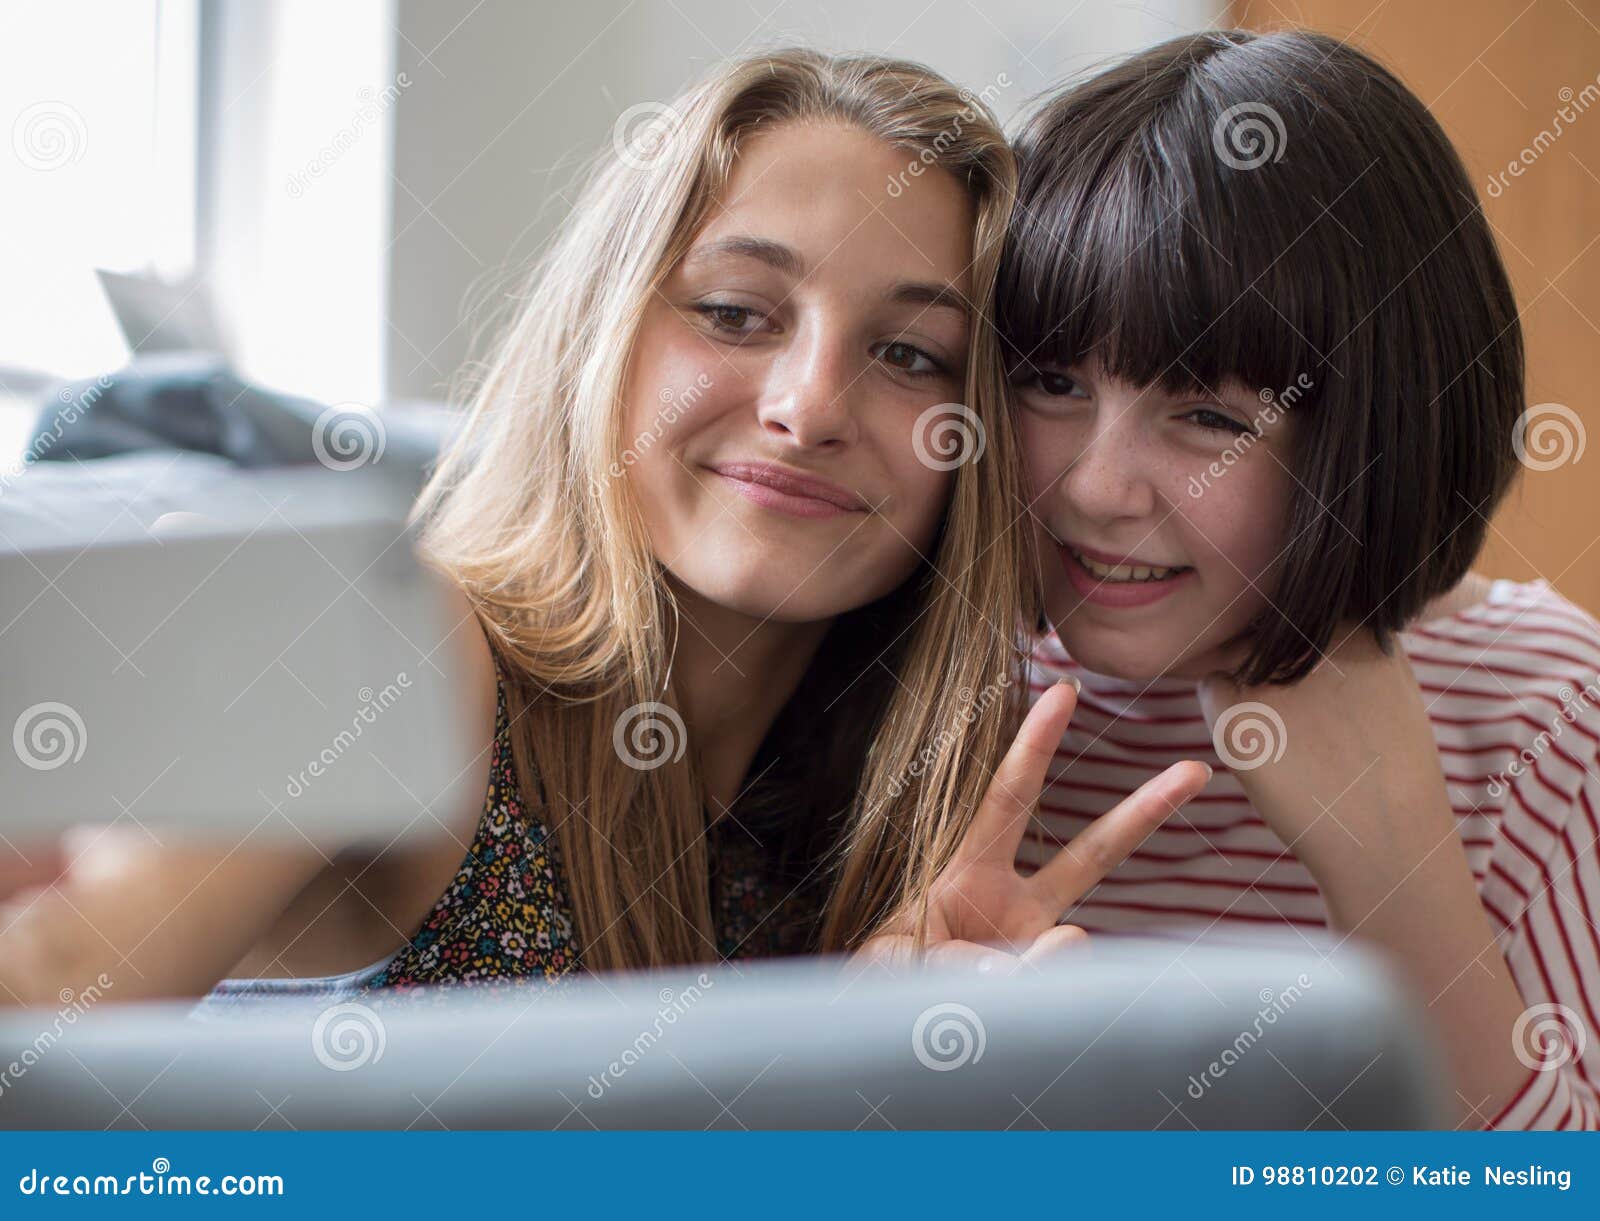 Teen Girl Selfies On Bed Images